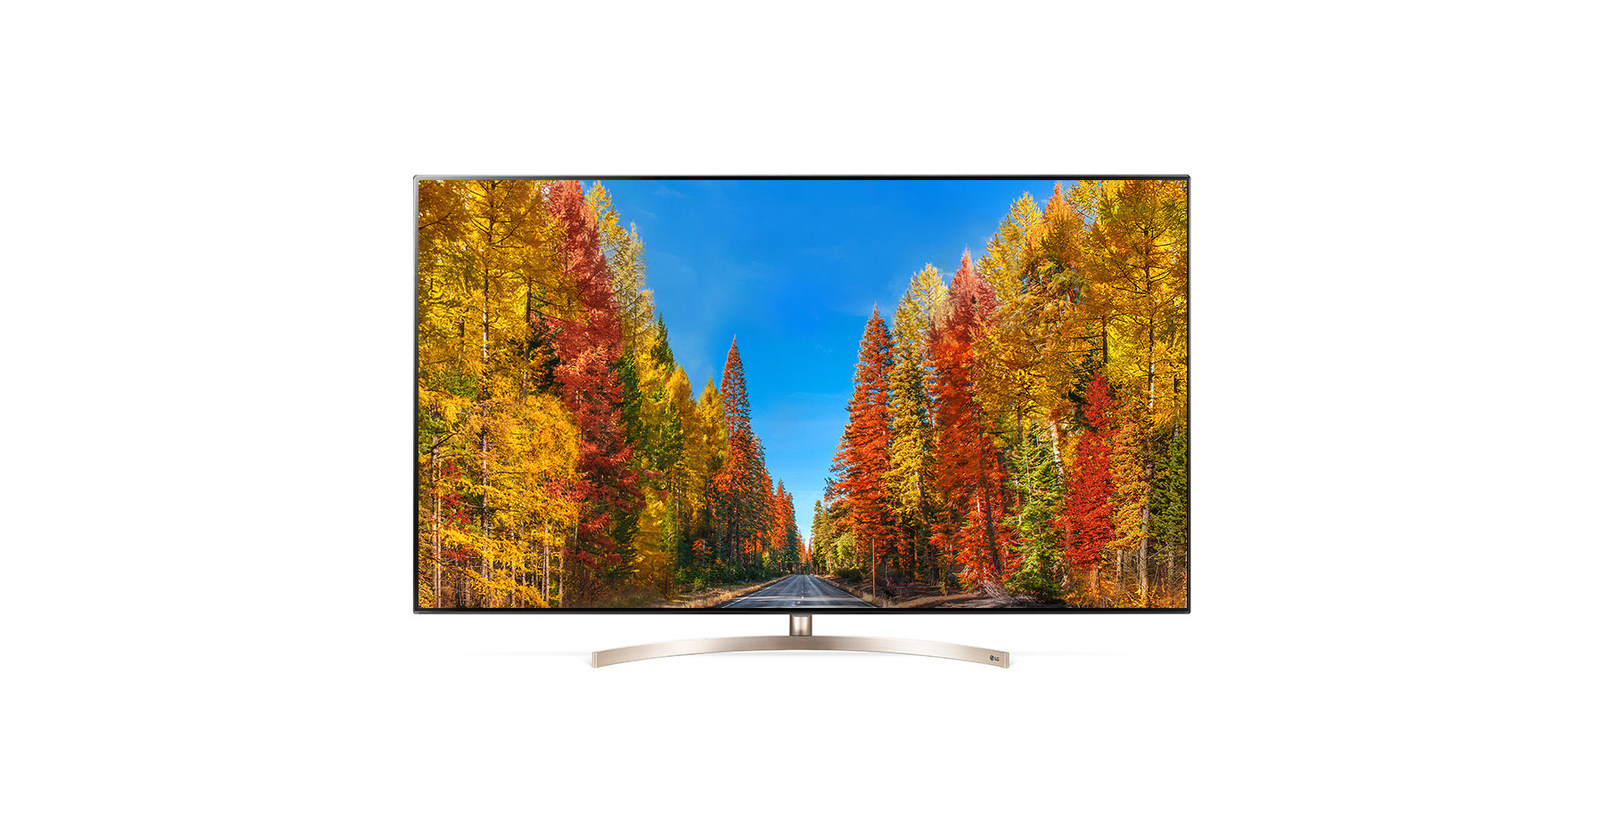 günahkâr Şık uyarlanmış  LG Unveils Futuristic 2018 TV Lineup With Advanced Display Technology At  CES 2018